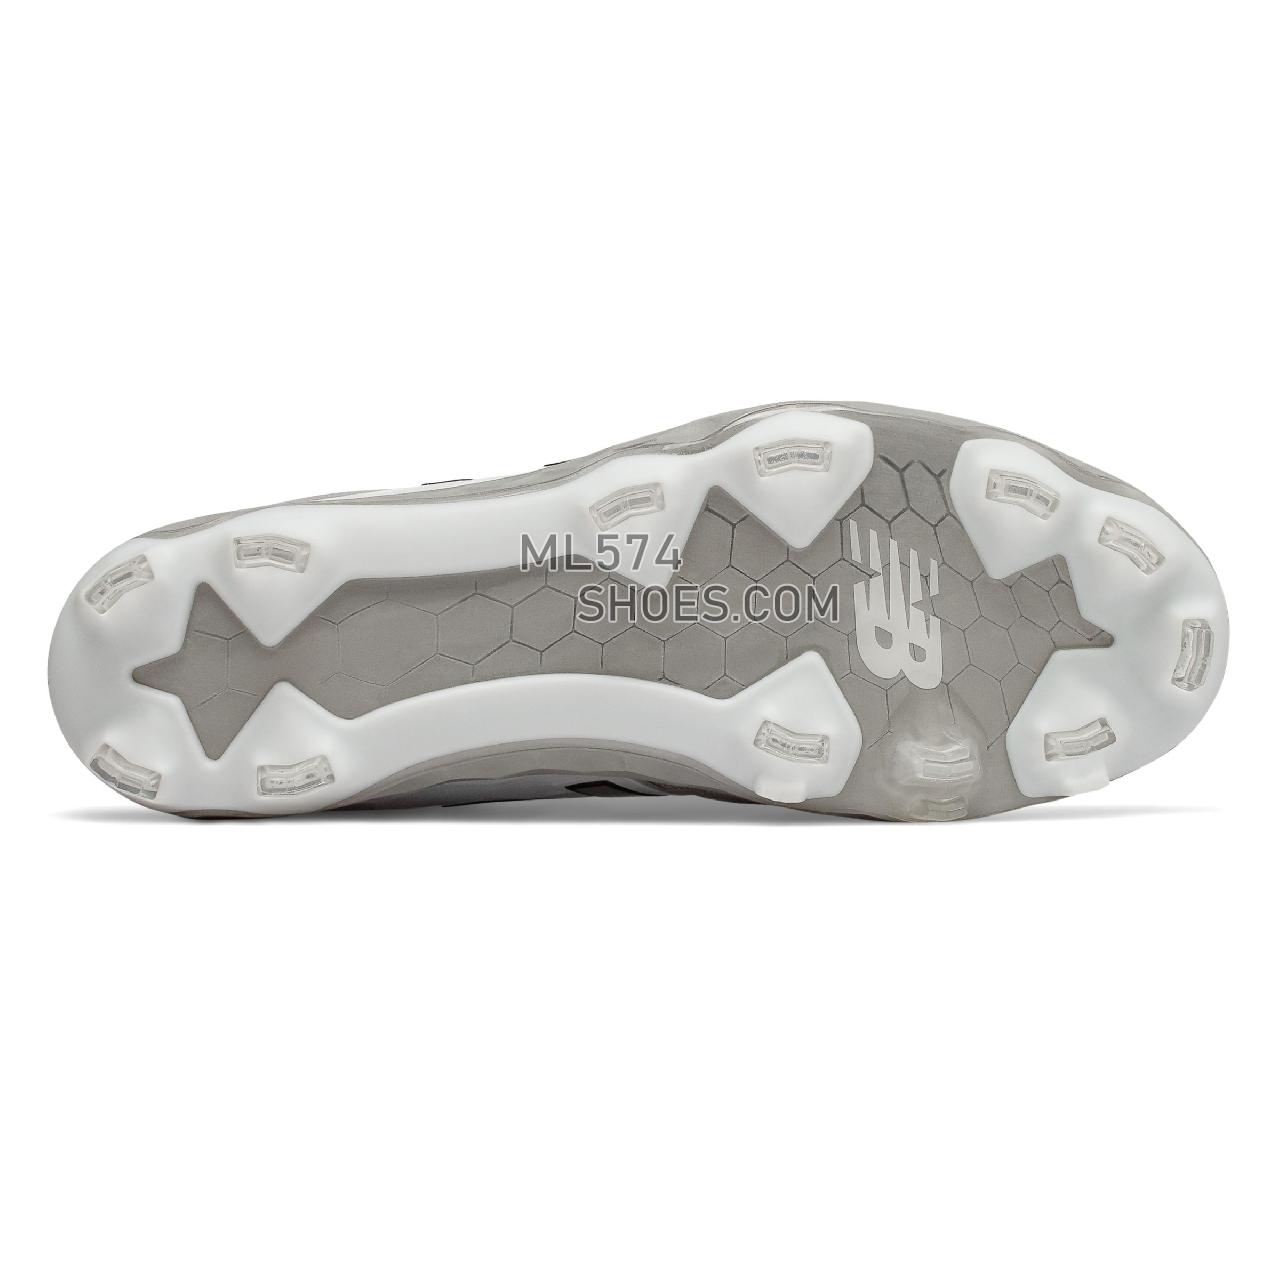 New Balance Fresh Foam 3000v4 TPU - Men's 3000 - Baseball Grey with White - PL3000G4